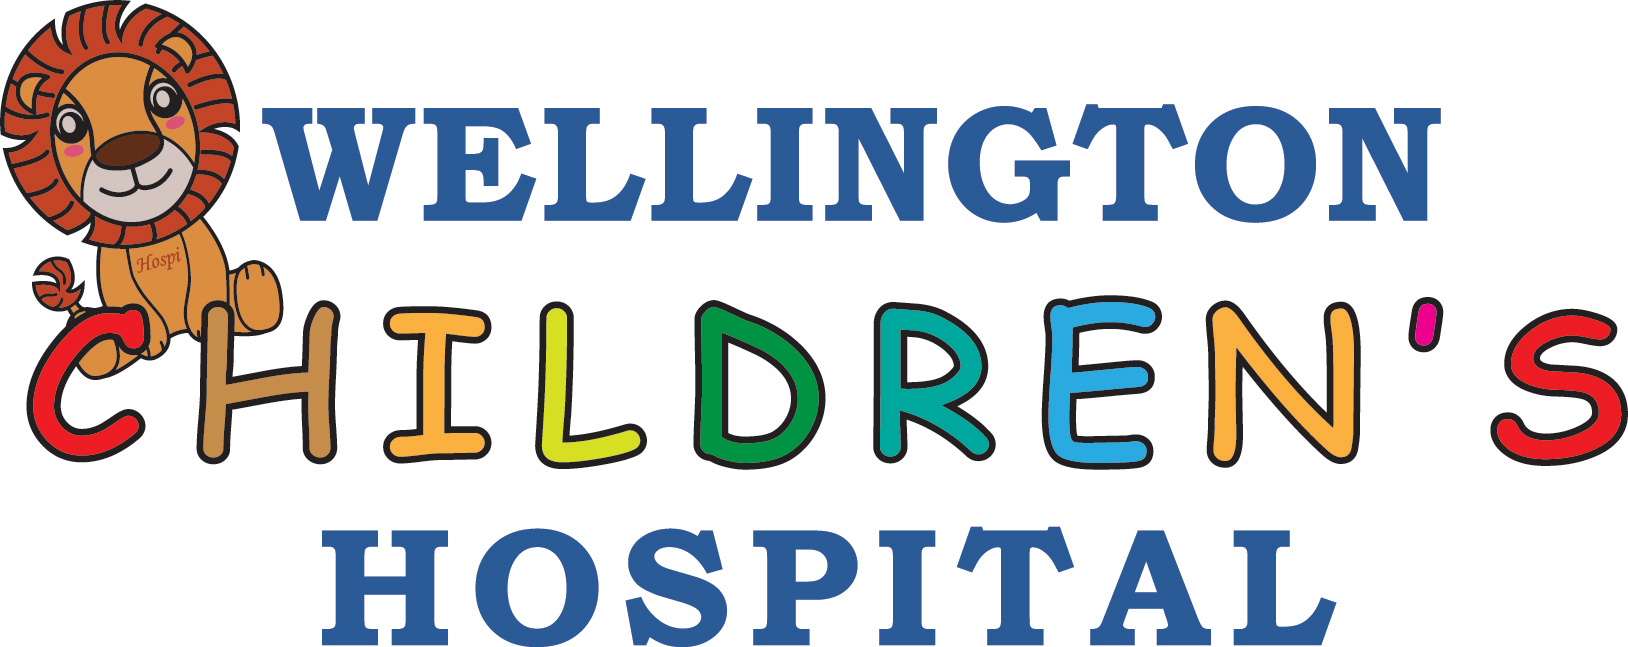 Wellington Children Hospital logo